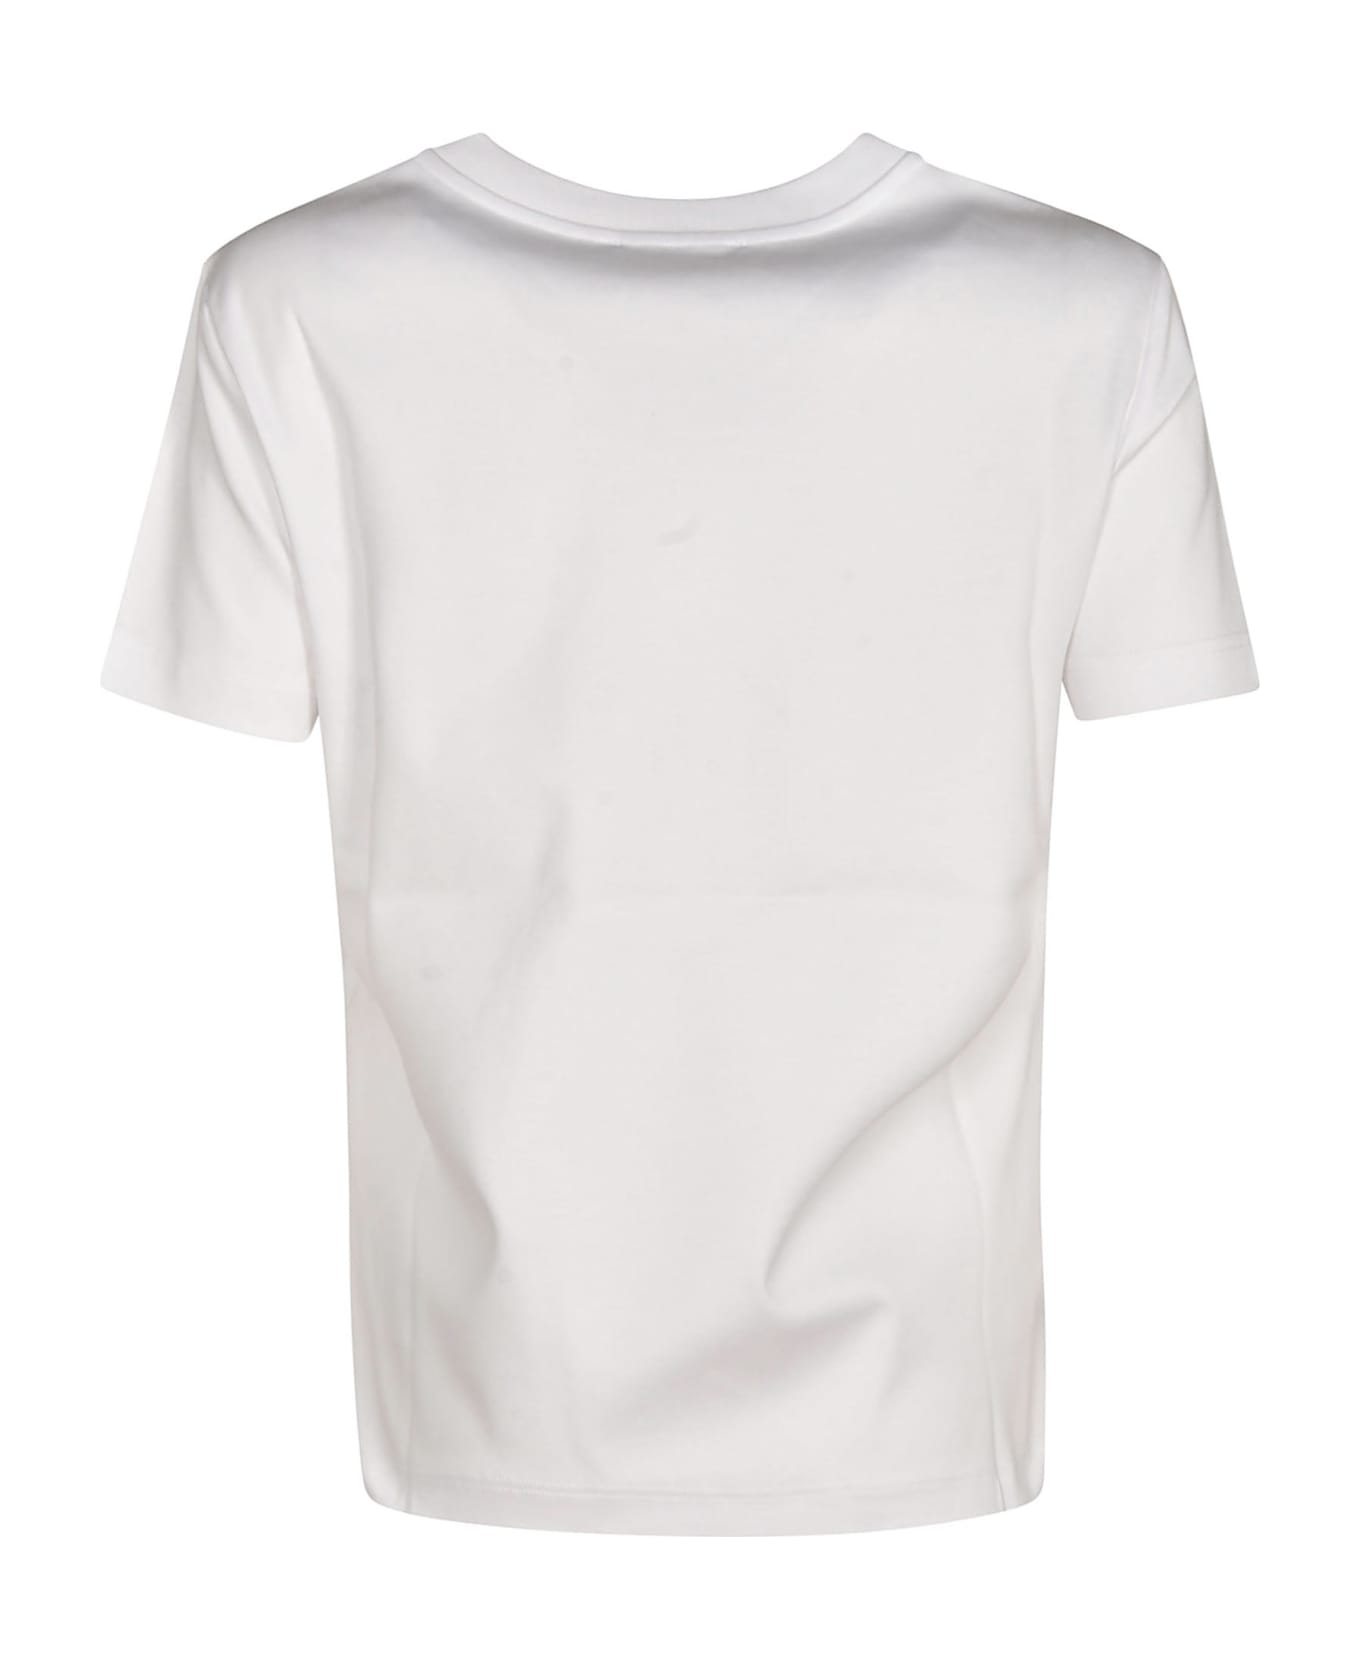 Dolce & Gabbana Logo T-shirt - White Tシャツ